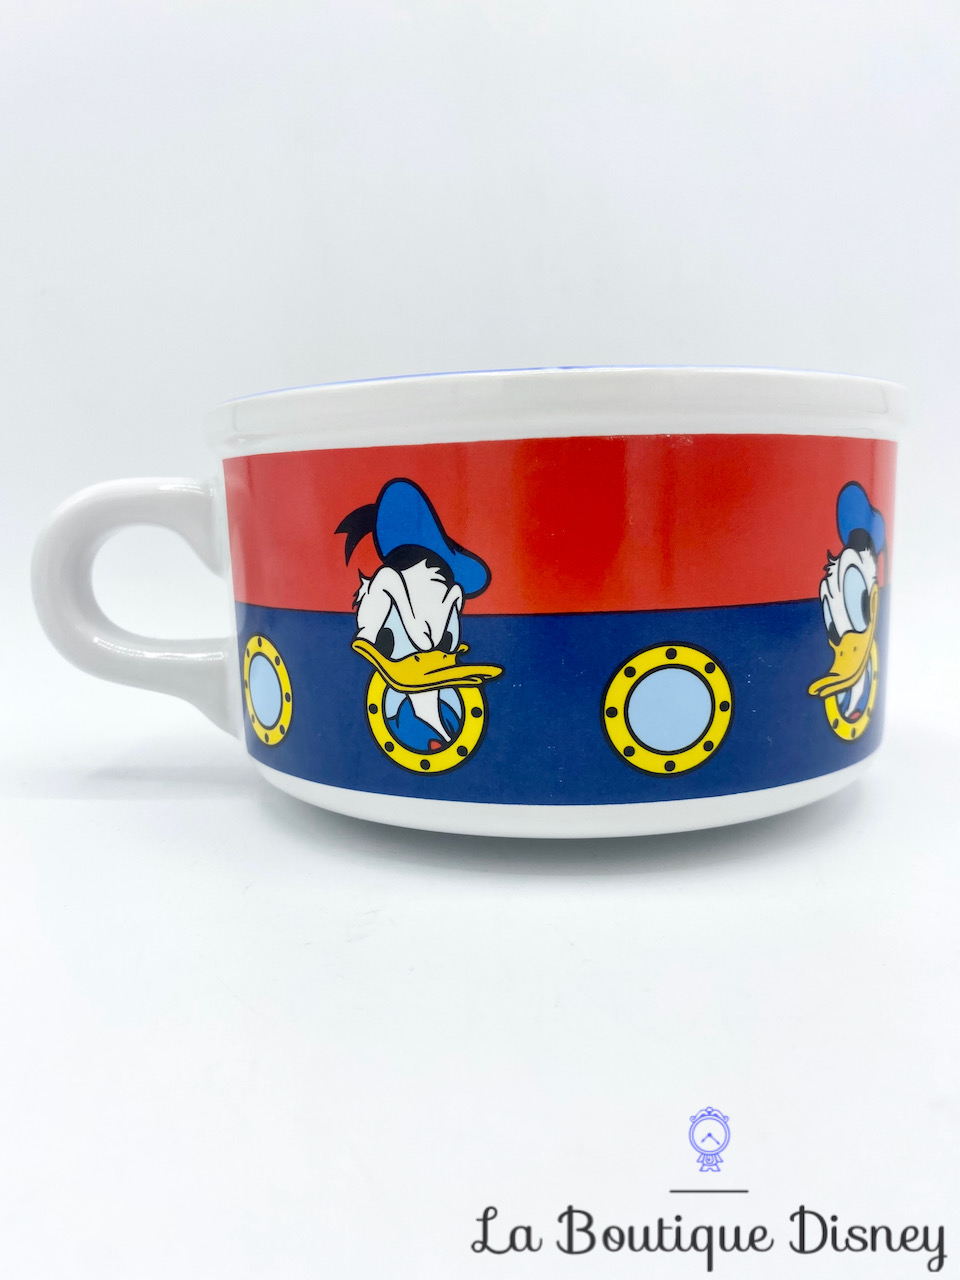 Bol Donald Duck Disney mug tasse hublot bleu rouge canard